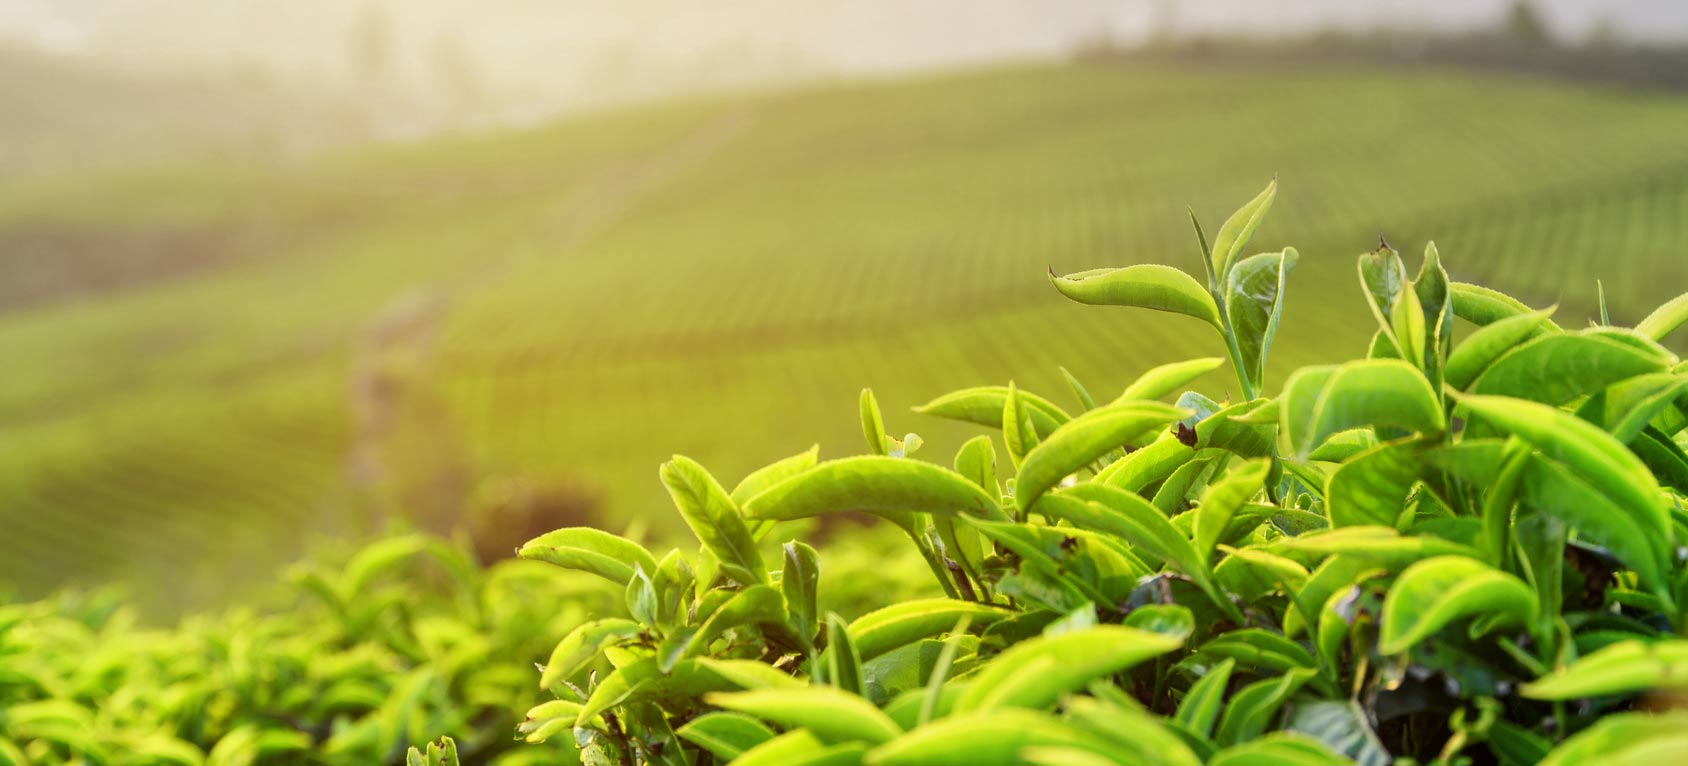 Does Green Tea Help the Heart?